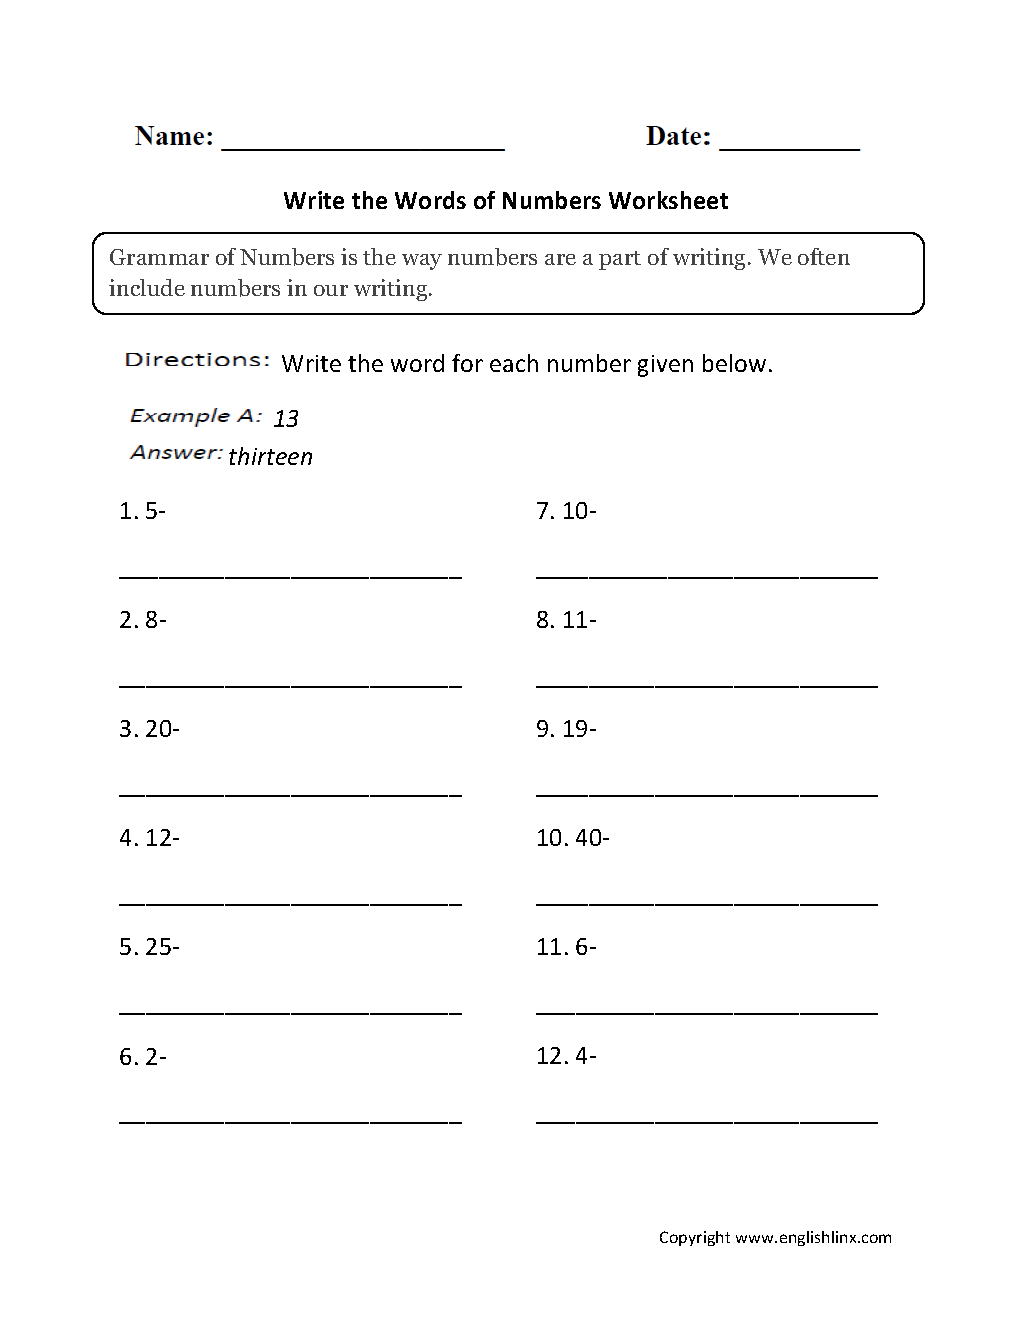 grammar-mechanics-worksheets-grammar-of-numbers-worksheets